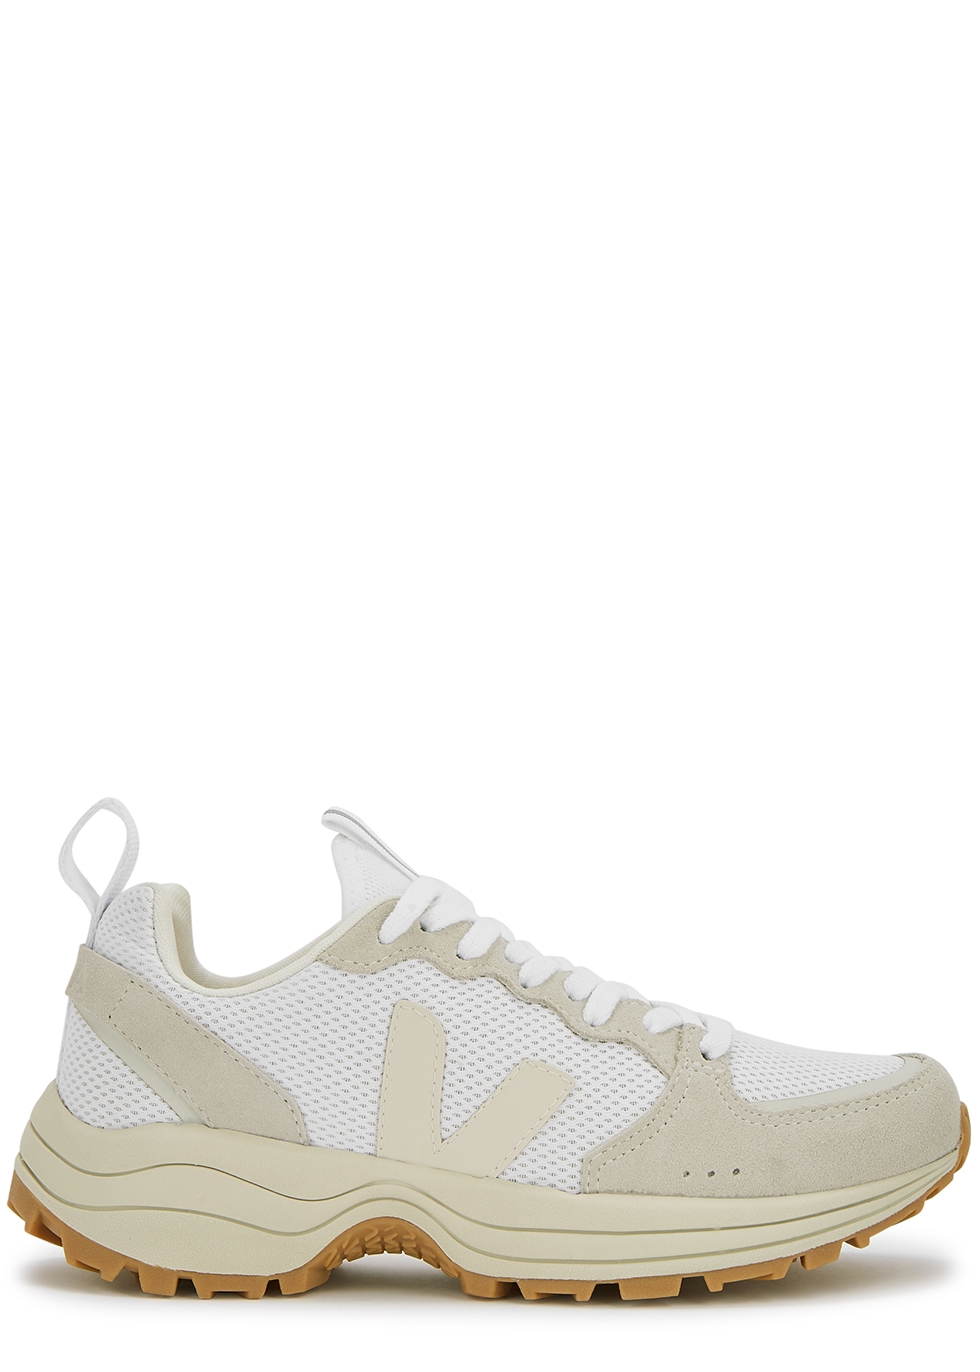 Venturi white mesh sneakers